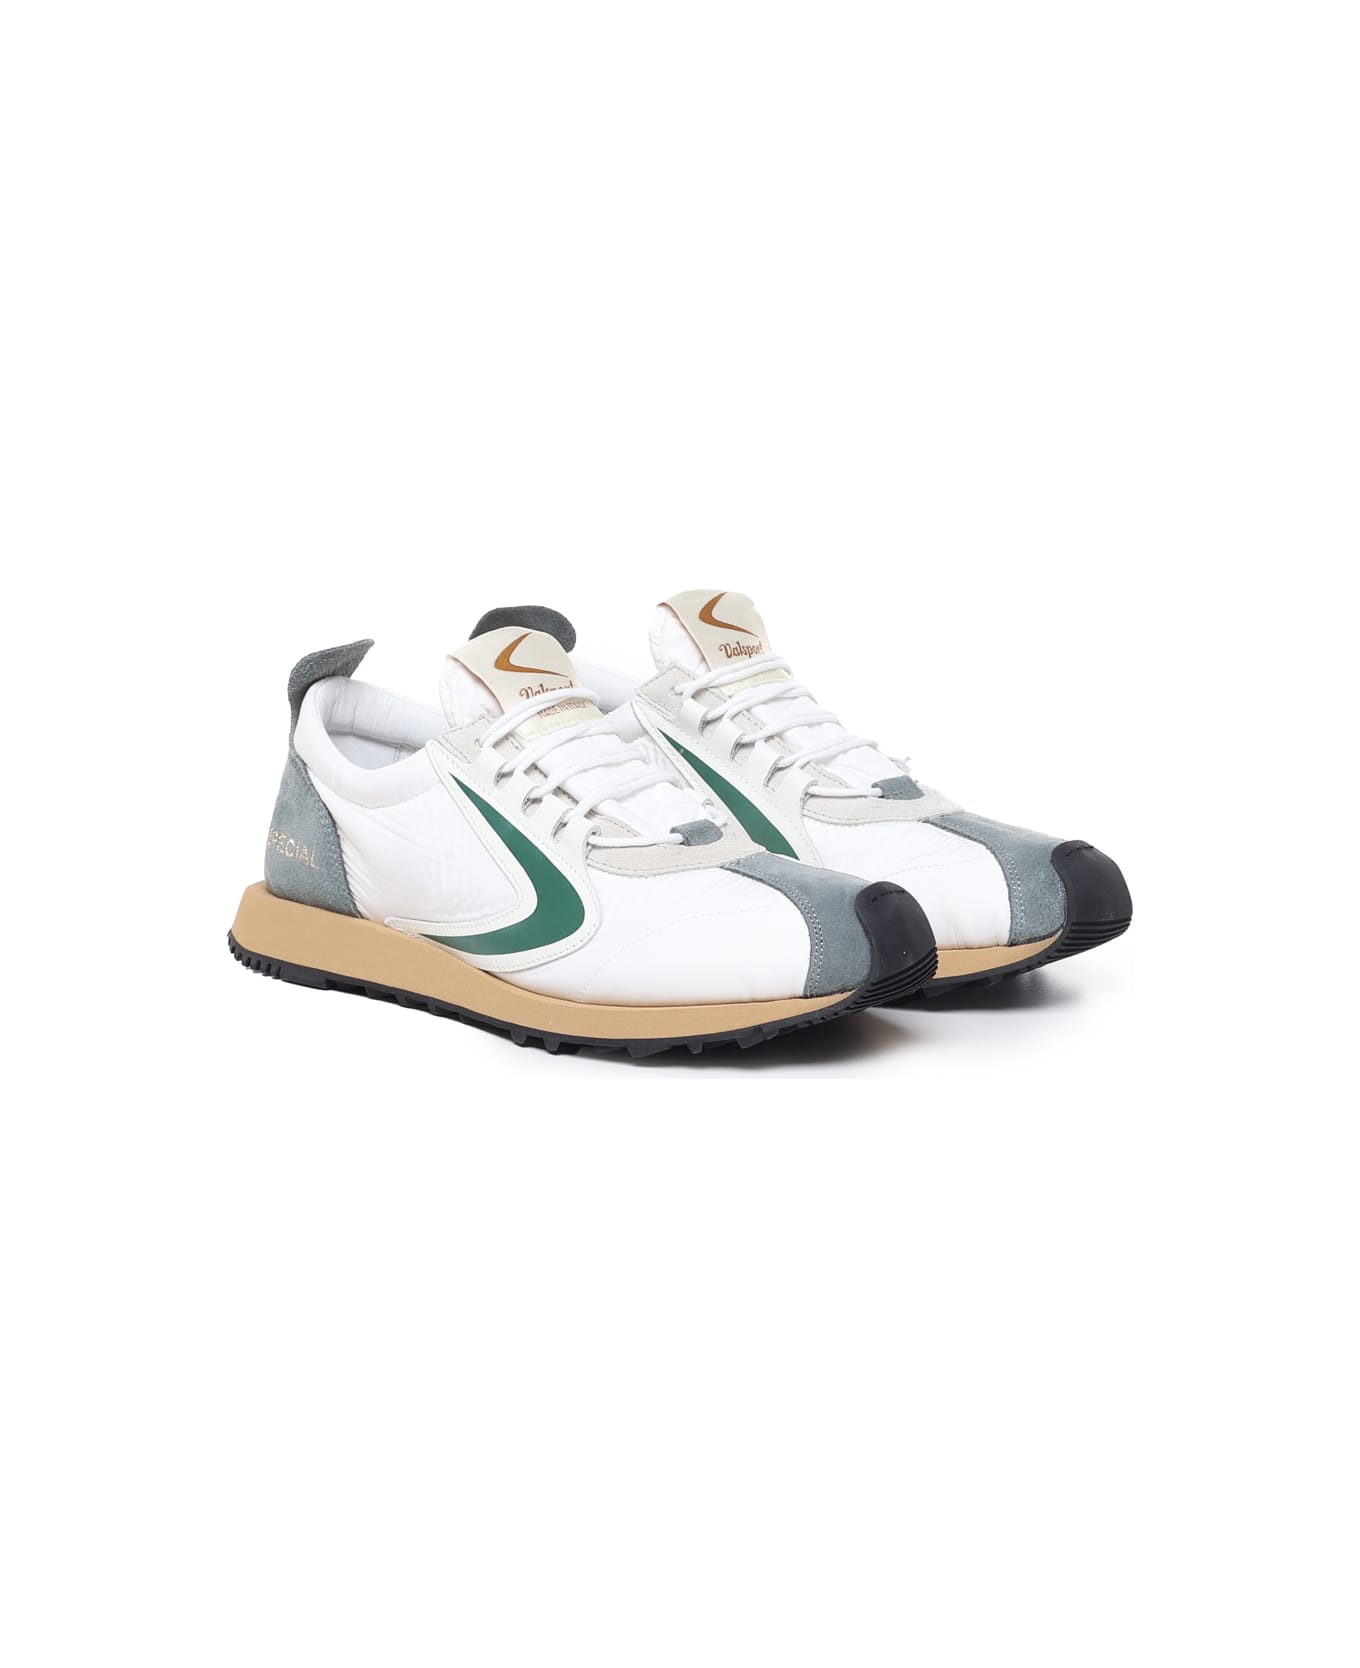 Valsport Special Nylon 03 Sneakers - White, grey, green 